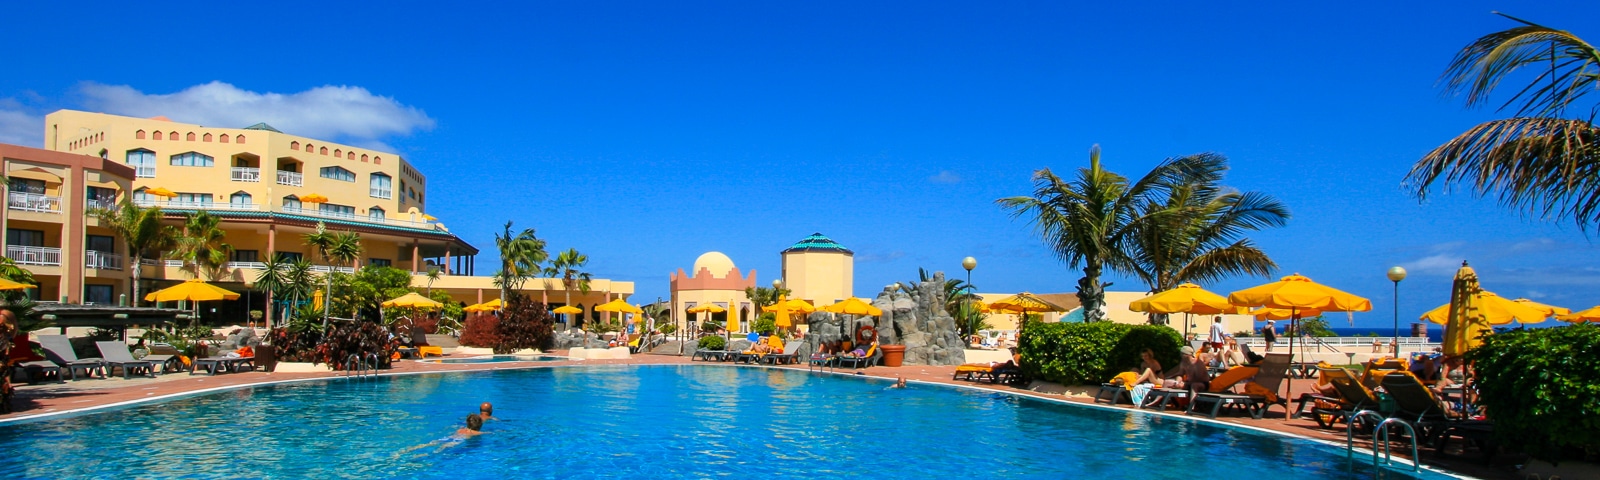 Hotel Playa Esmeralda ****